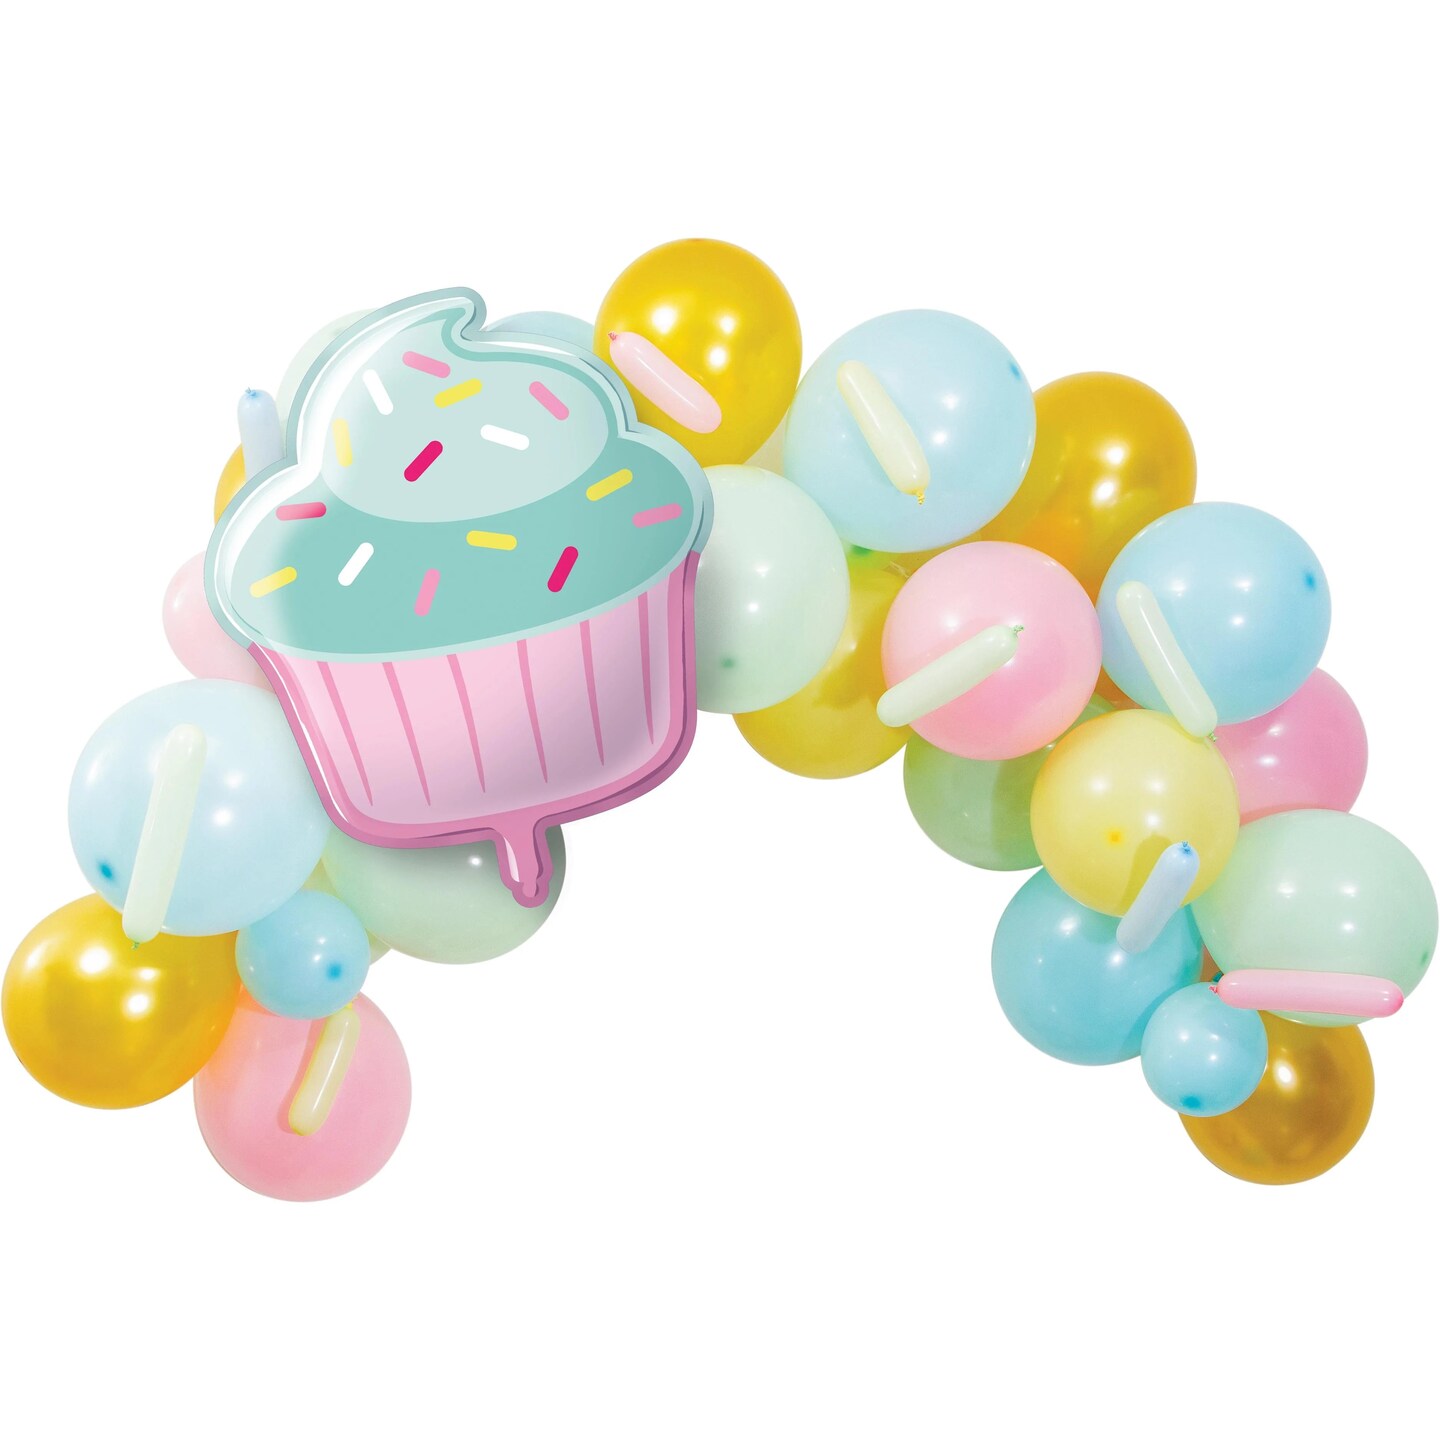 Bakery Sweets Balloon Garland Kit